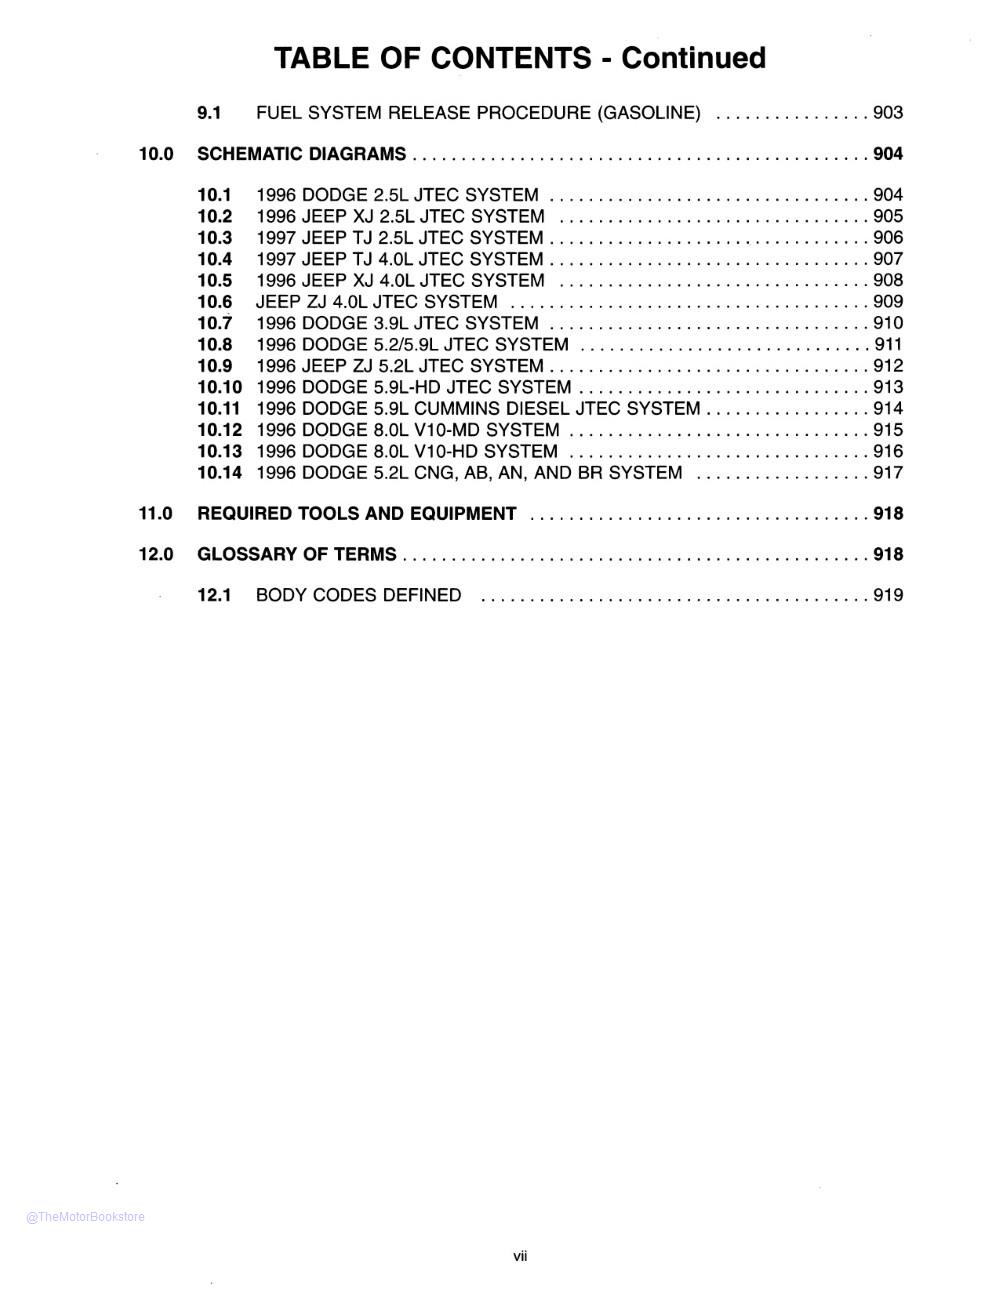 1996-1997 Dodge Truck Powertrain Diagnostic Procedures Manual  - Table of Contents 7